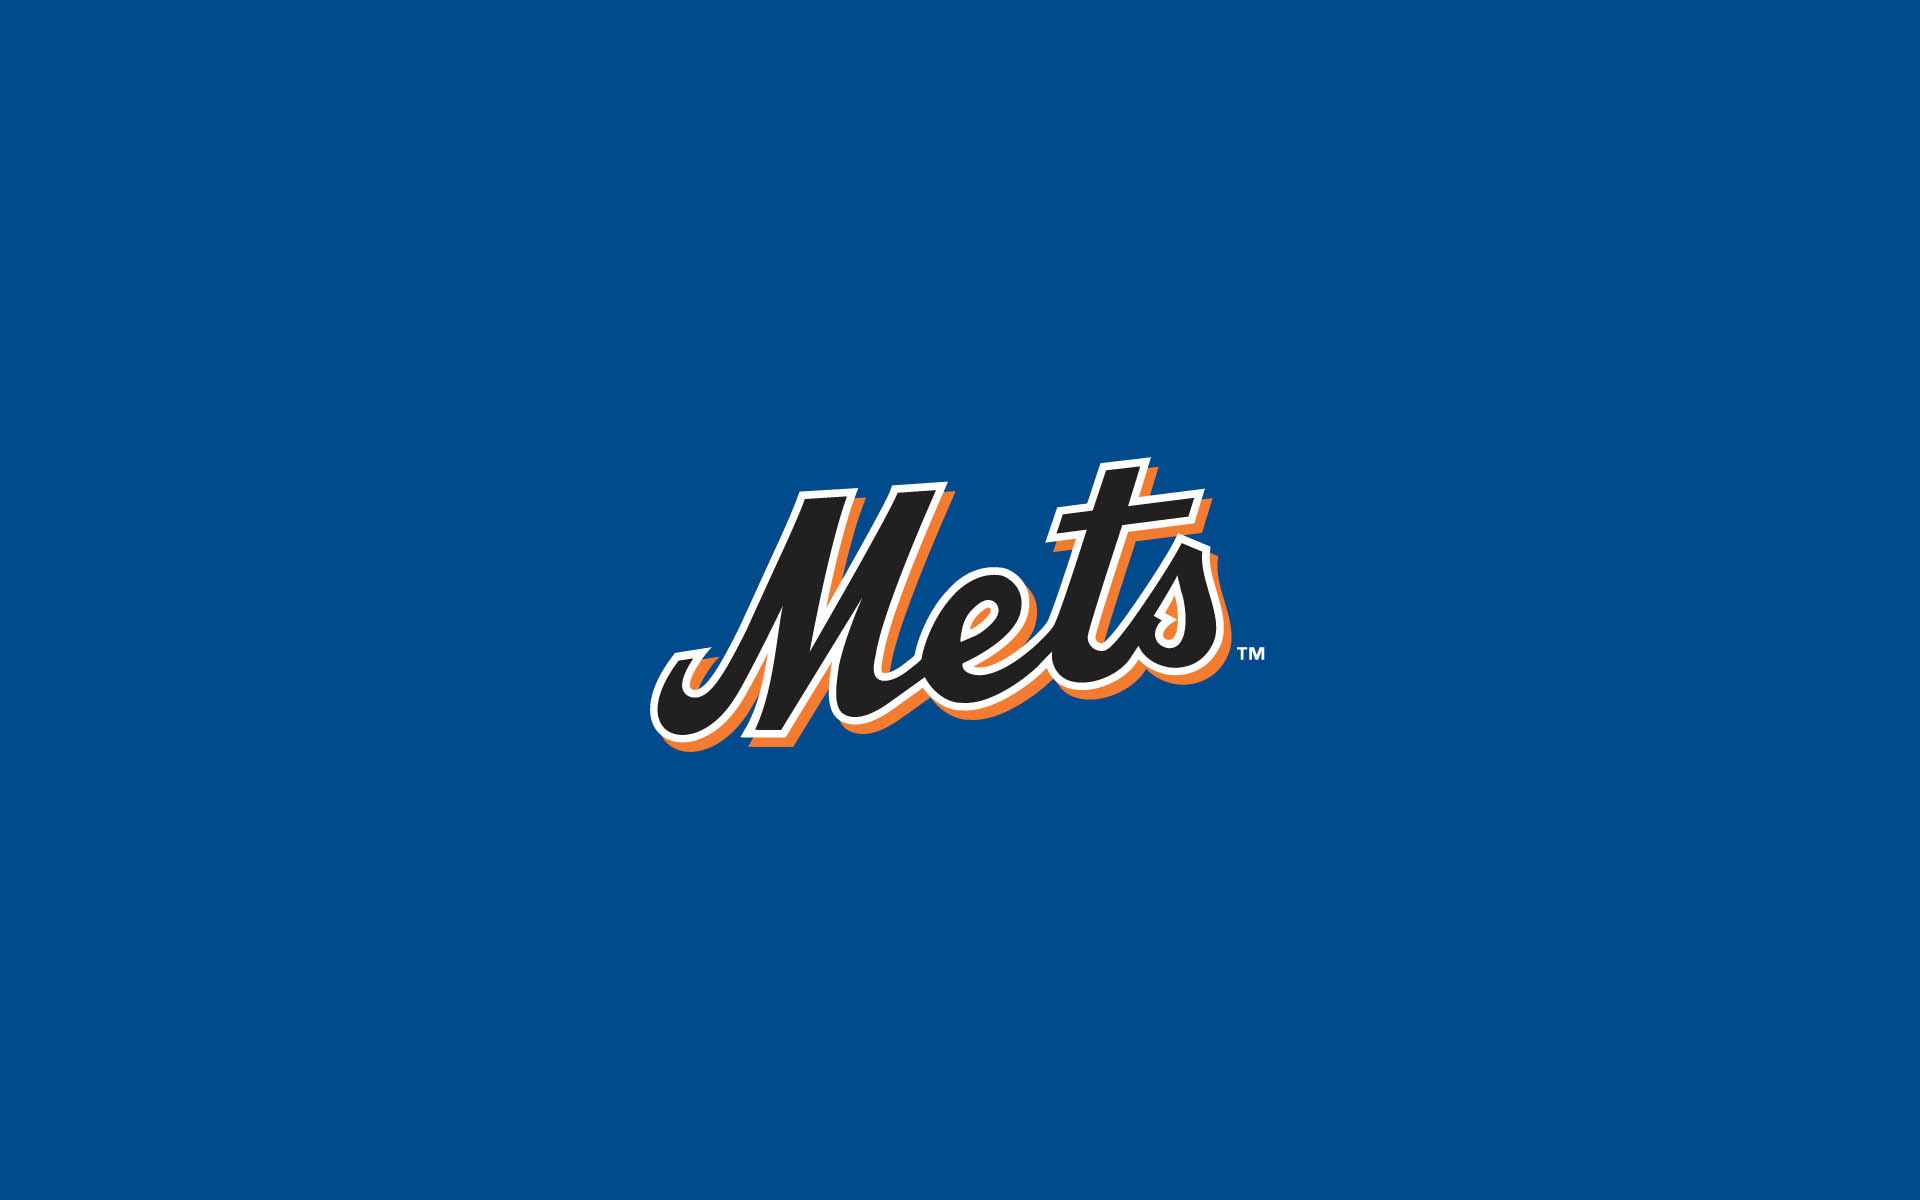  com http wallpaperspal com new york mets 2014 logo wallpaper